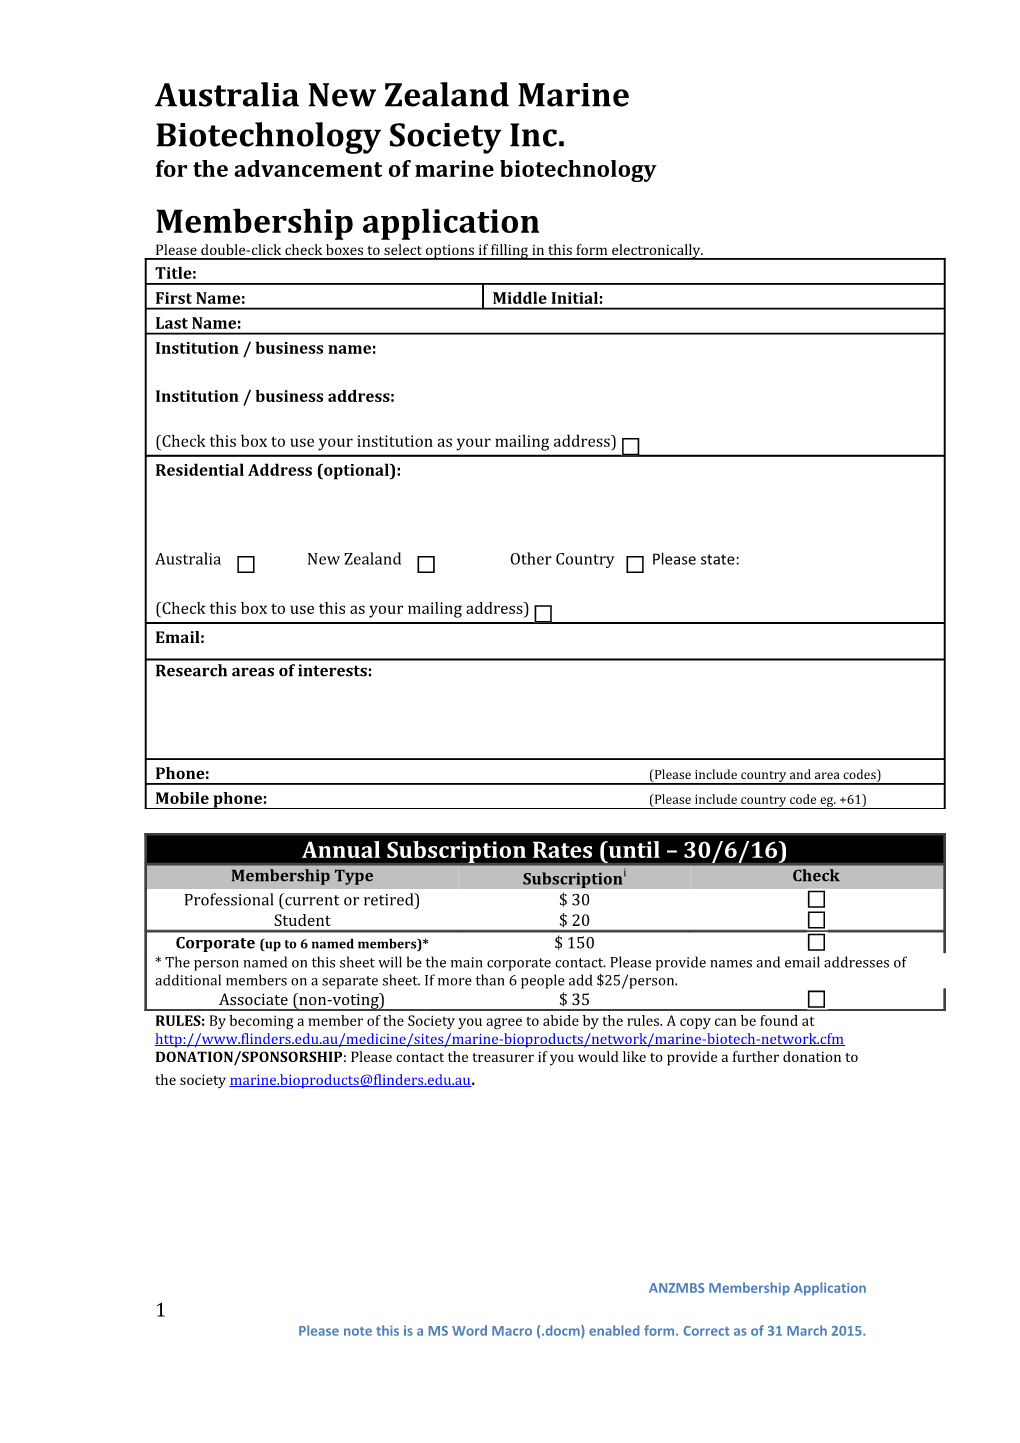 ANZMBS Membership Application